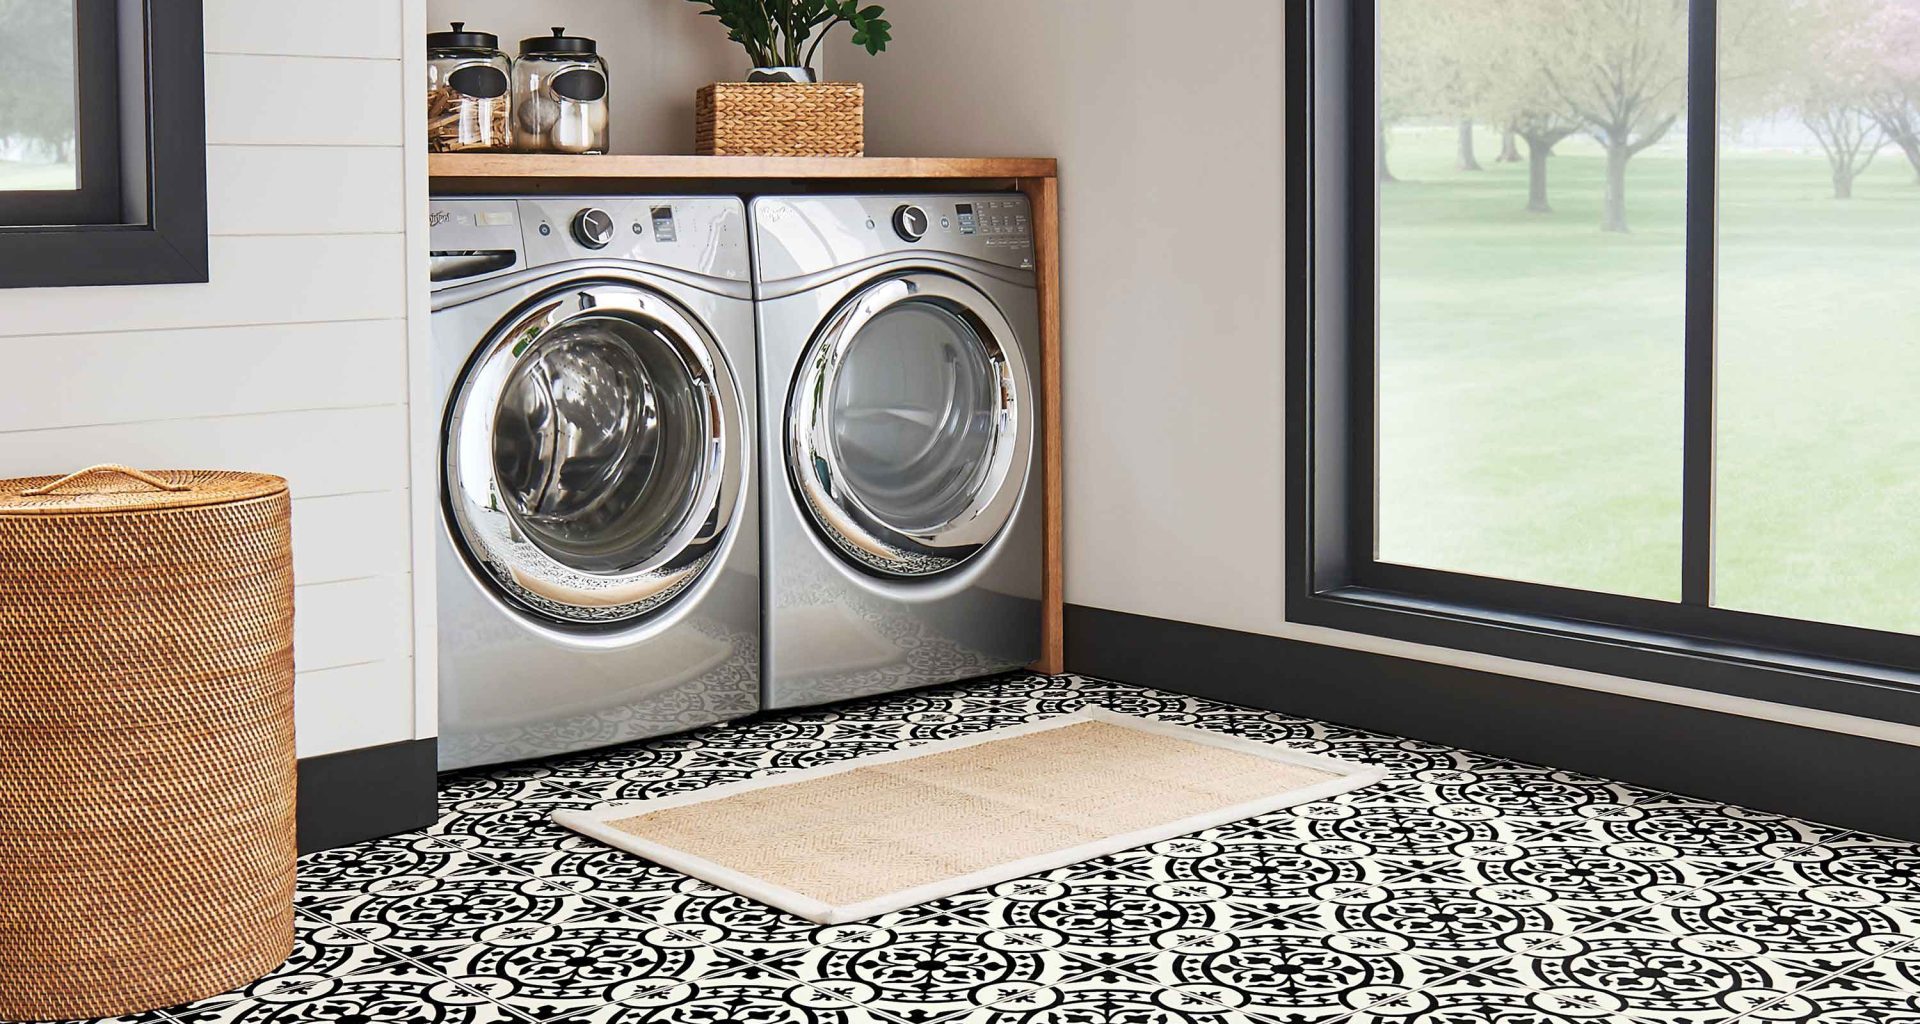 Sheet vinyl flooring in a laundry room scene.